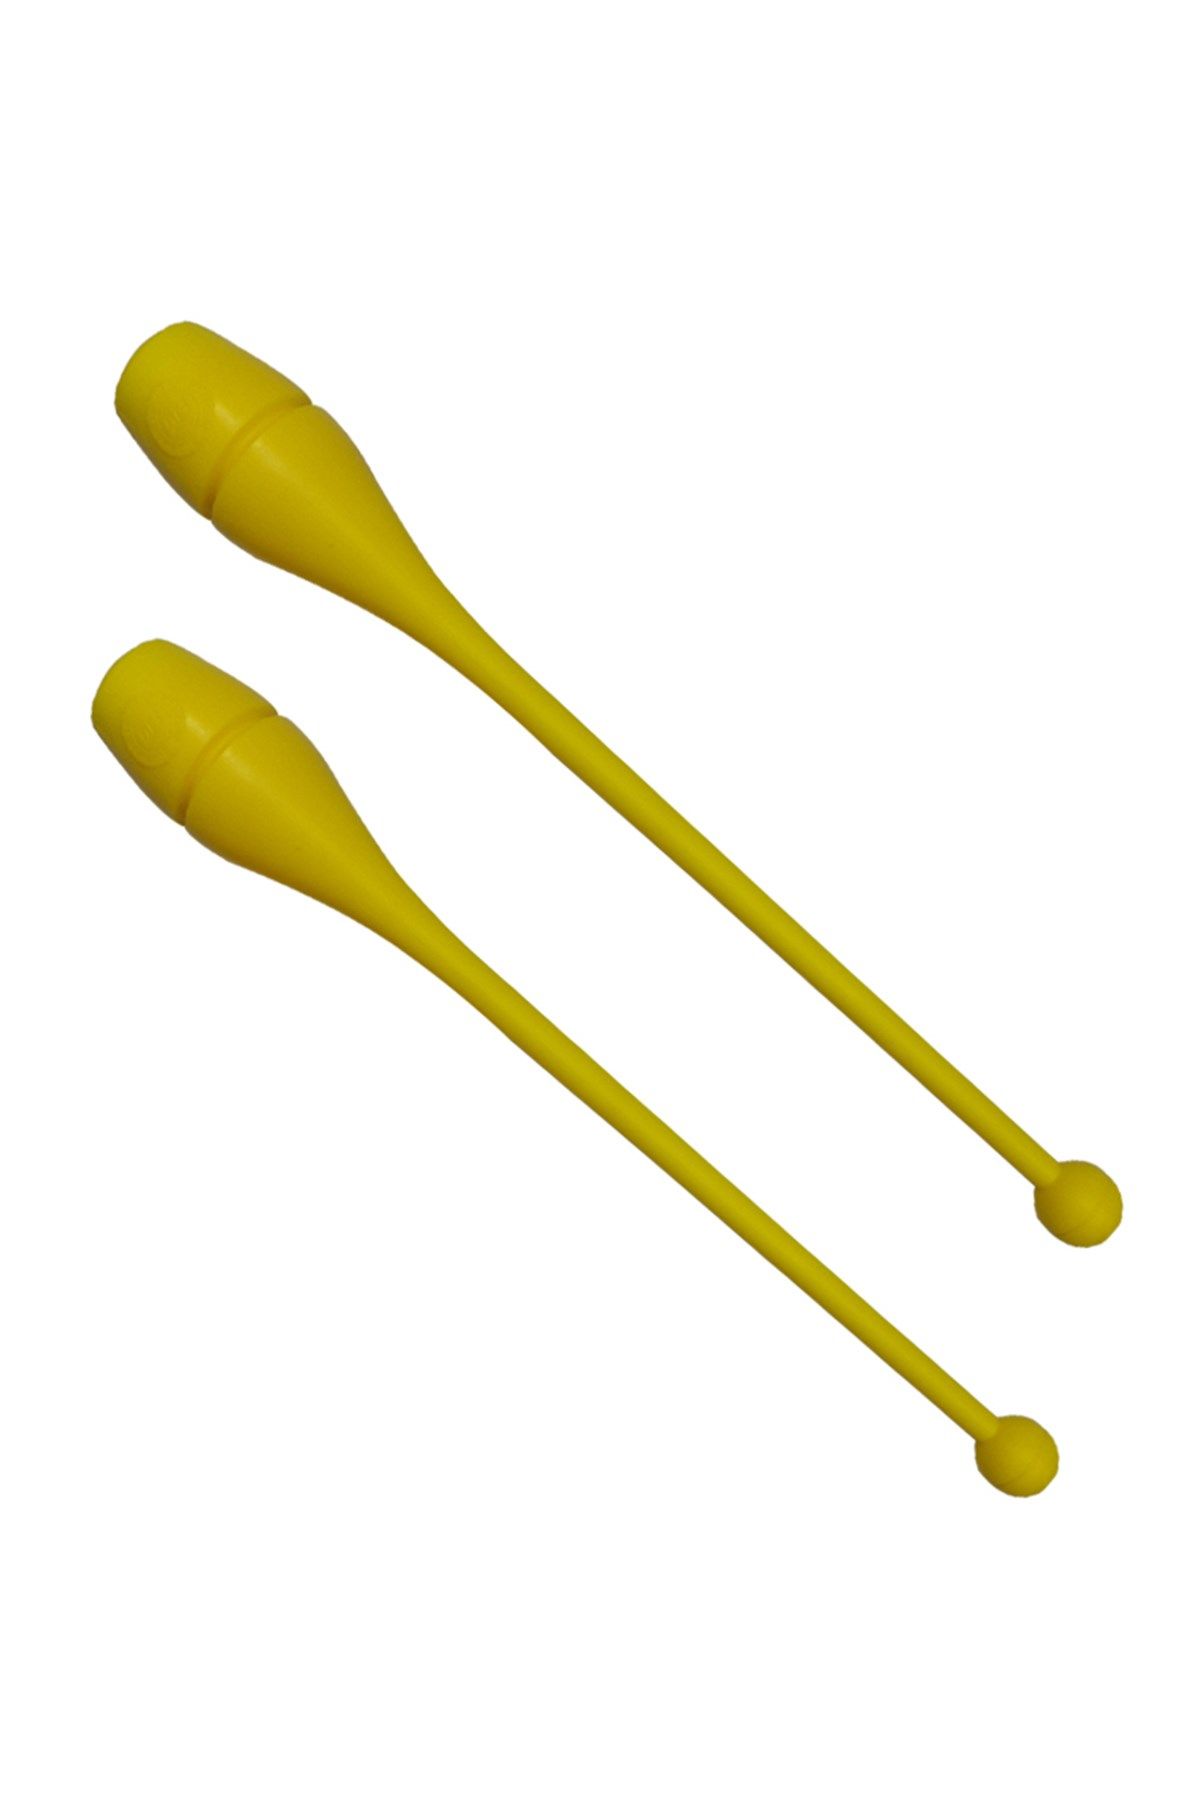 Ritmik Cimnastik Labutu Sarı FIG Onaylı 44cm - 150 Gr CWA136